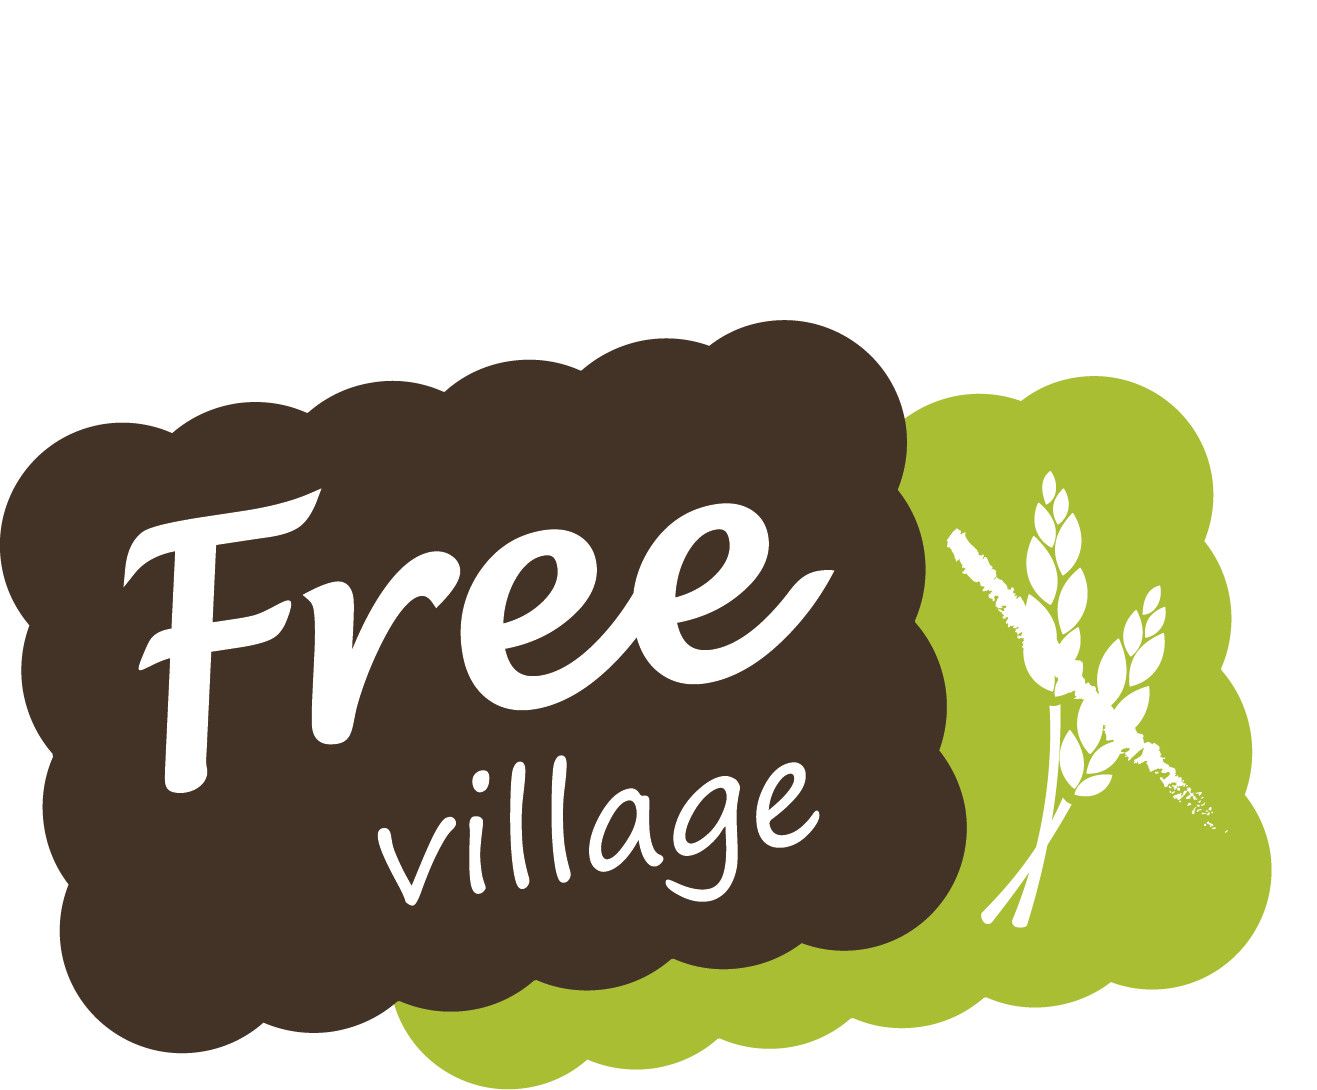 Free village